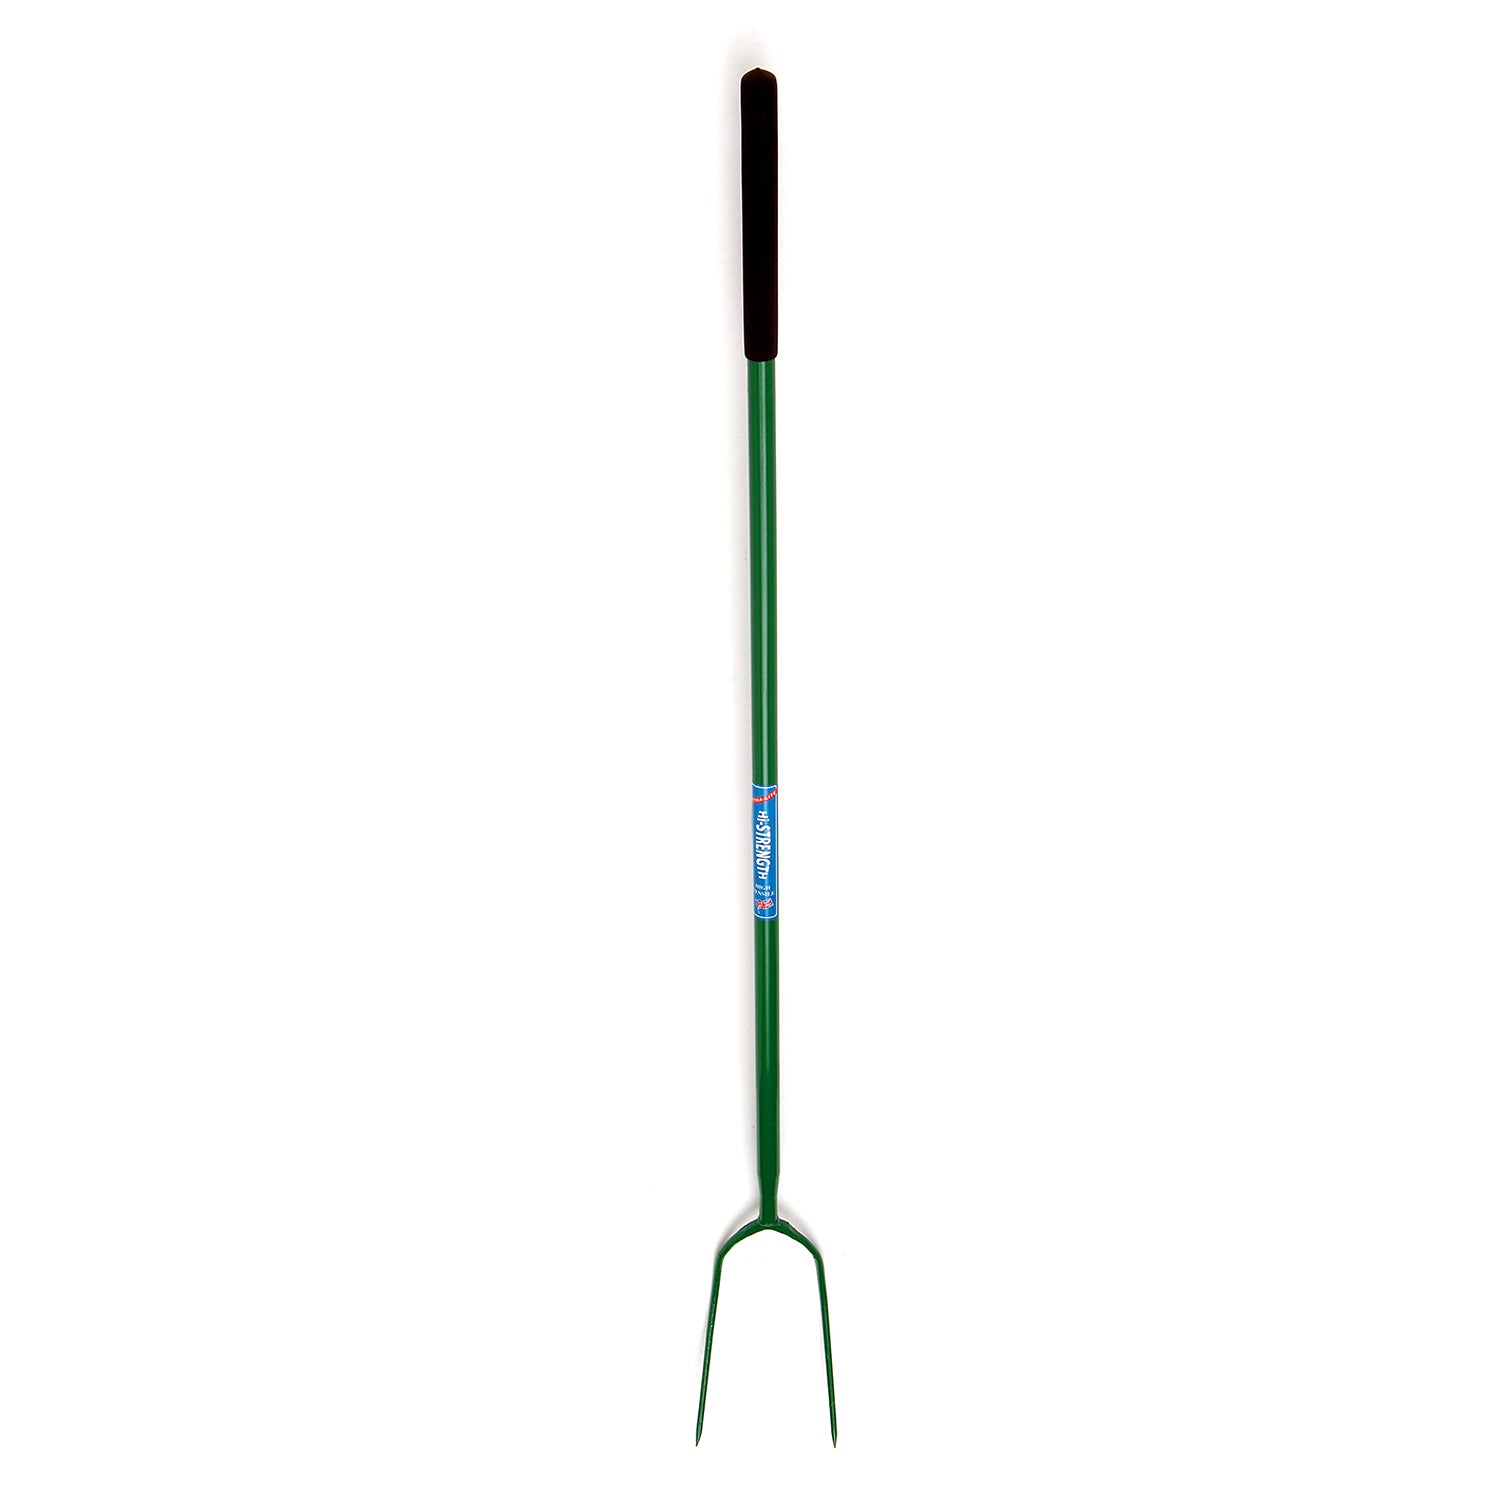 Fynalite Hi-Strength Hay Fork 2 Prong Long Handle